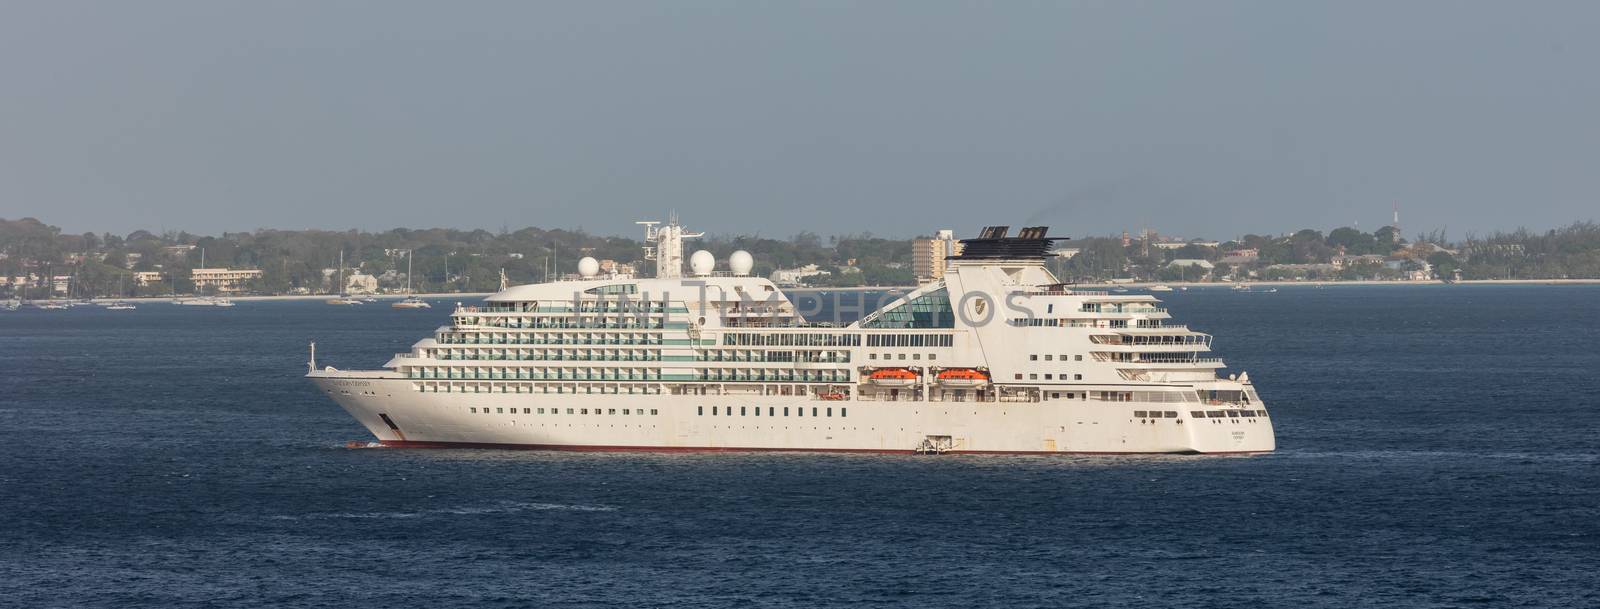 Seabourn Odyssey ship anchored next to Barbados by DamantisZ